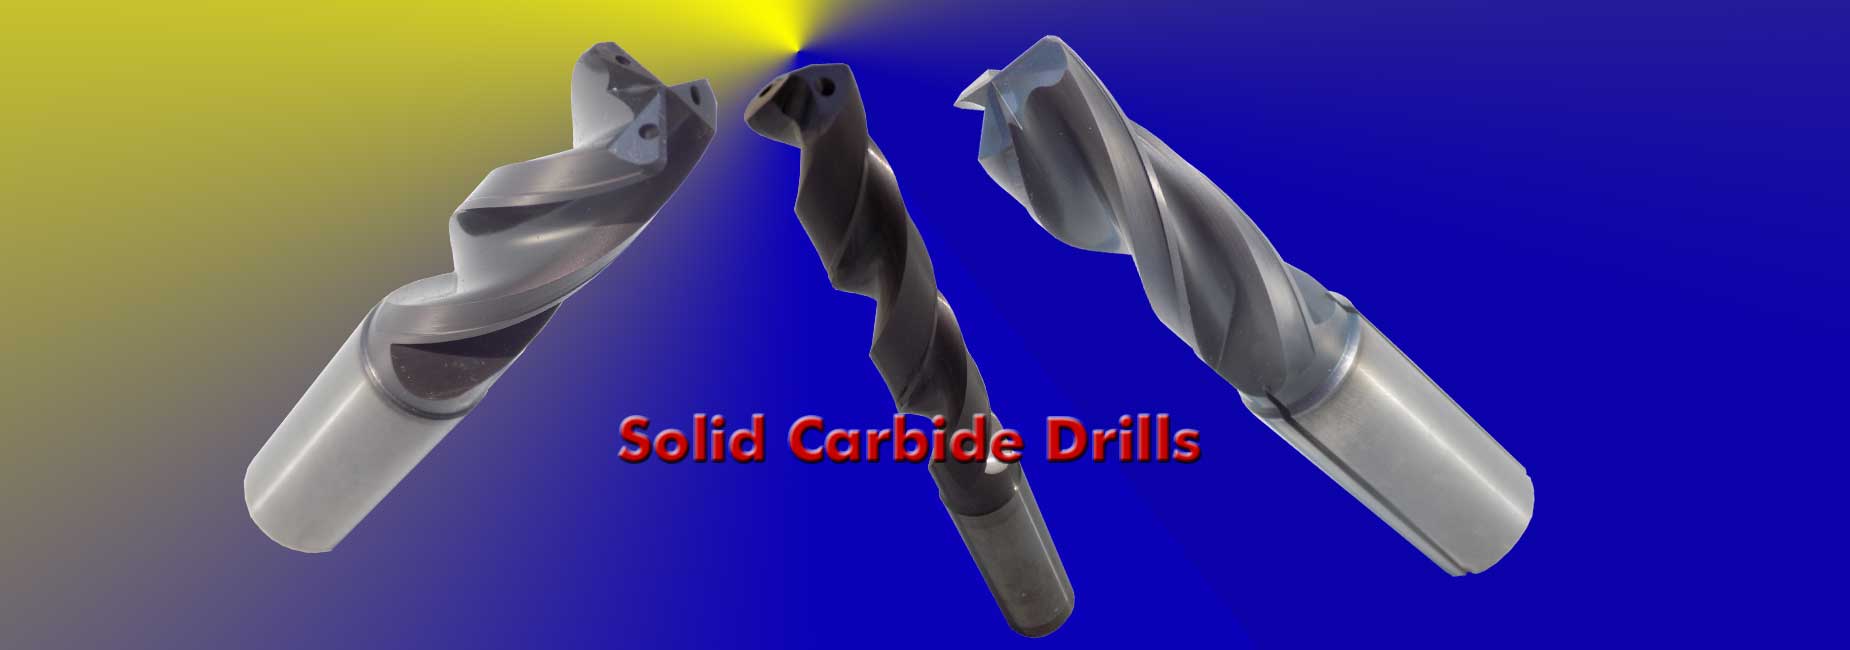 Solid carbide Drills 1850x650 copy